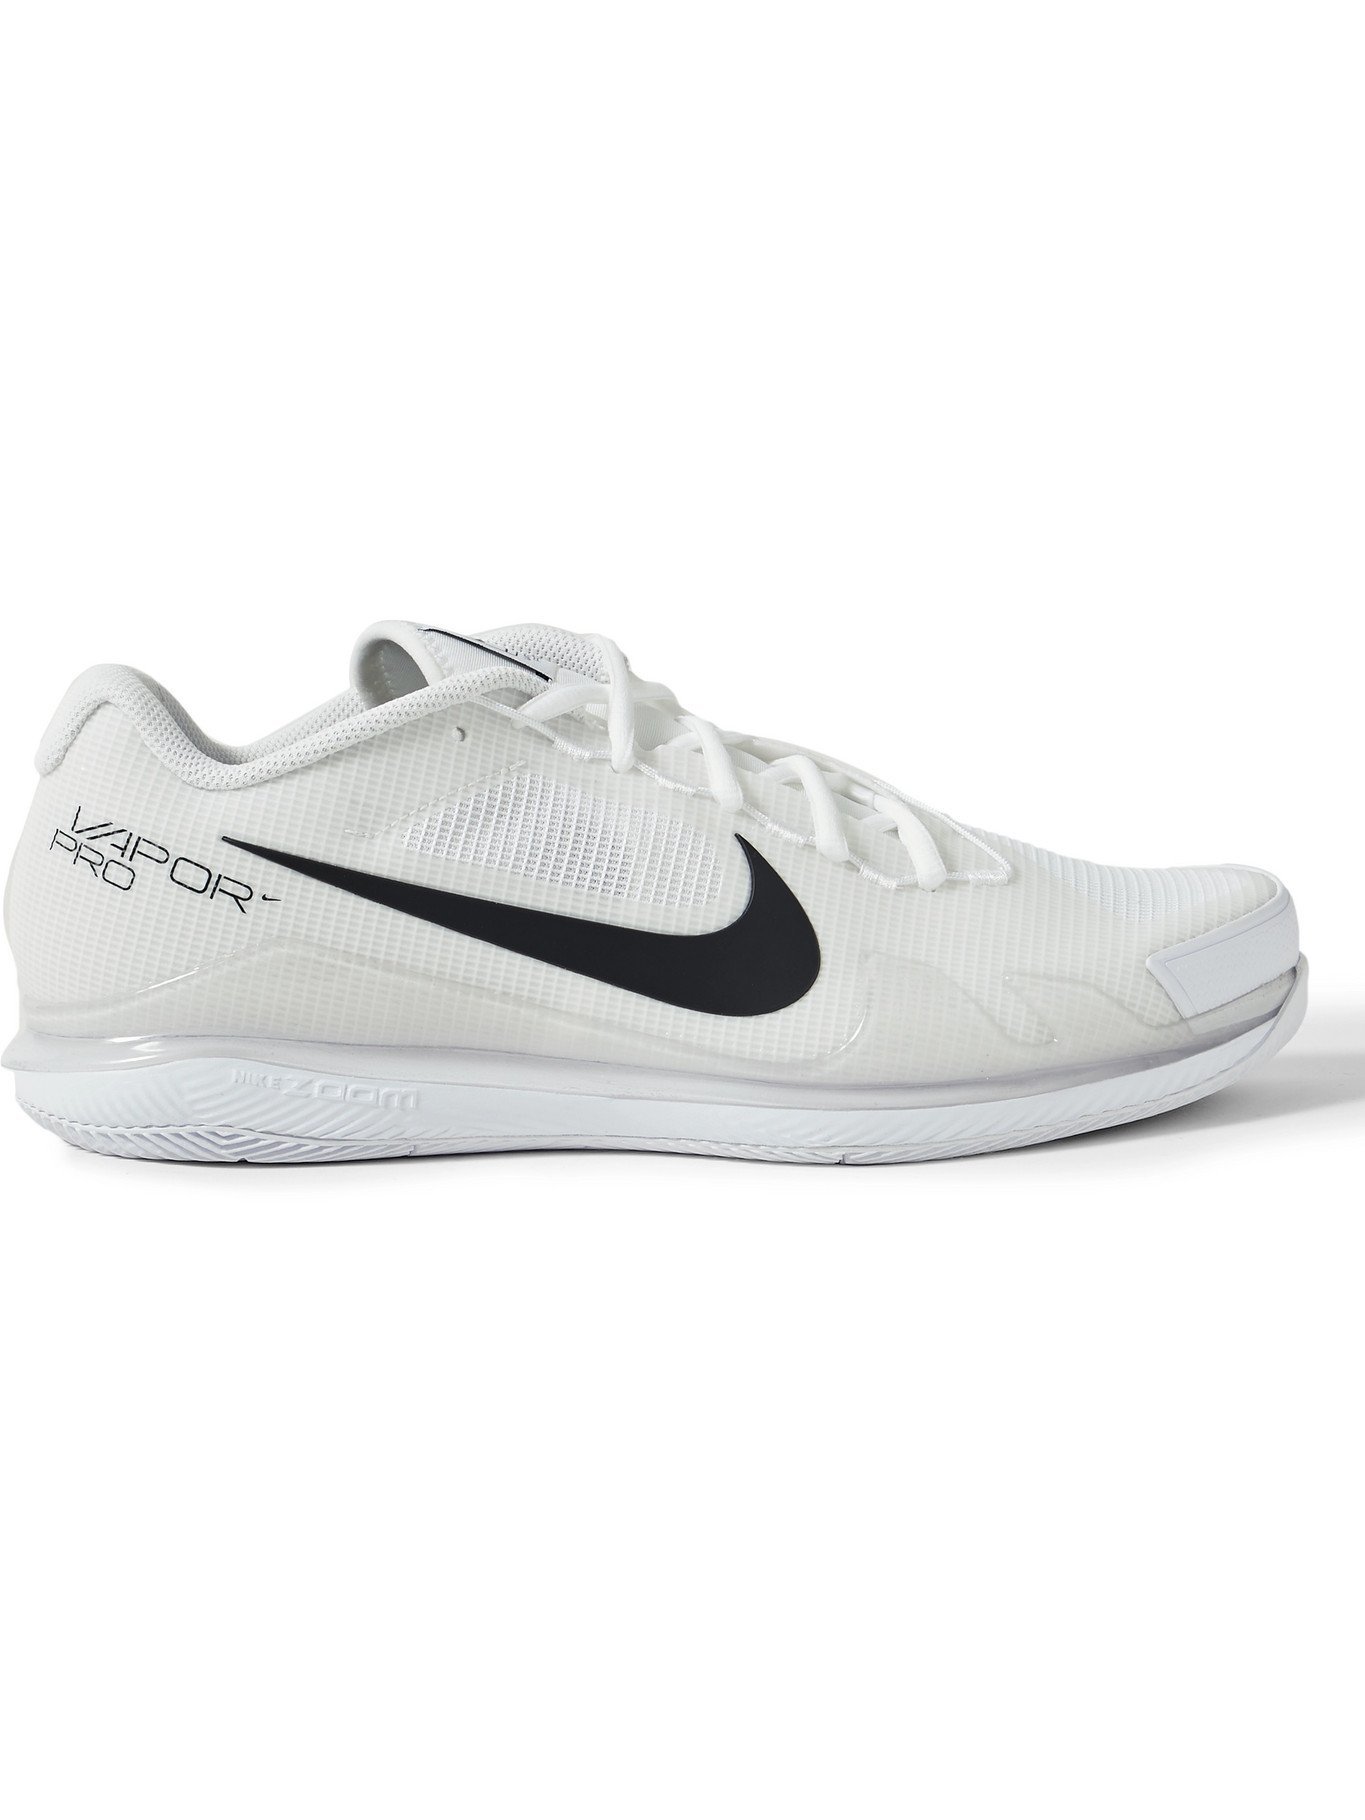 NIKE TENNIS - NikeCourt Air Zoom Vapor Pro Rubber-Trimmed Mesh Sneakers - White - 7 Nike Tennis